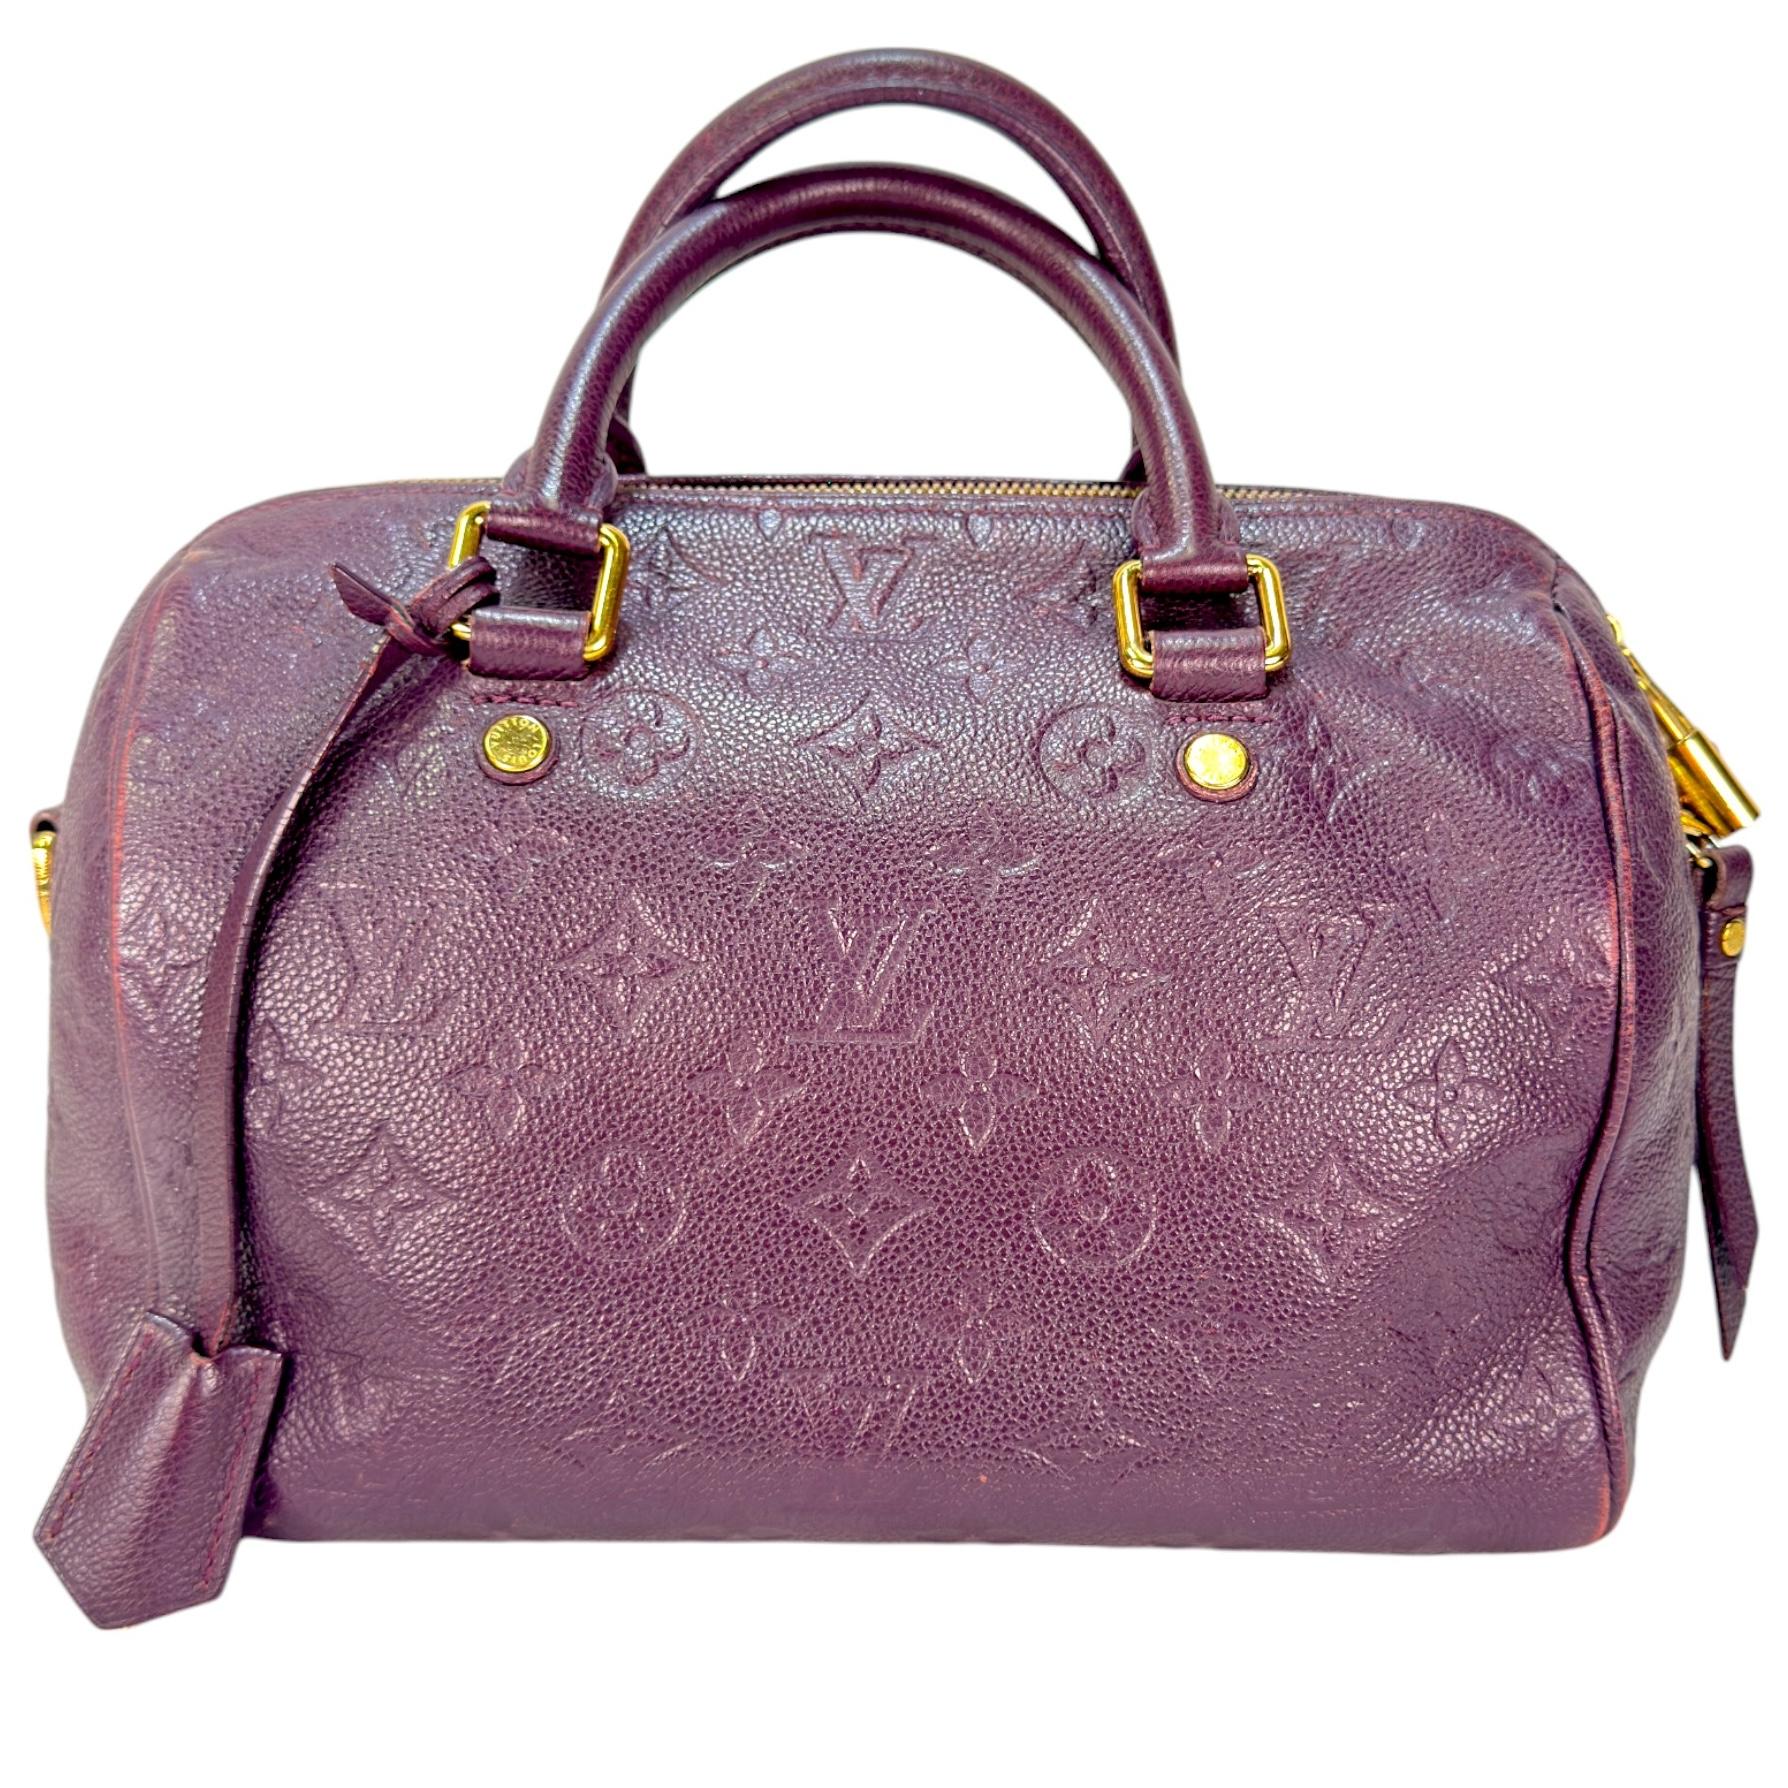 Authentic estate Louis Vuitton Empriente Speedy 25 purple leather bag